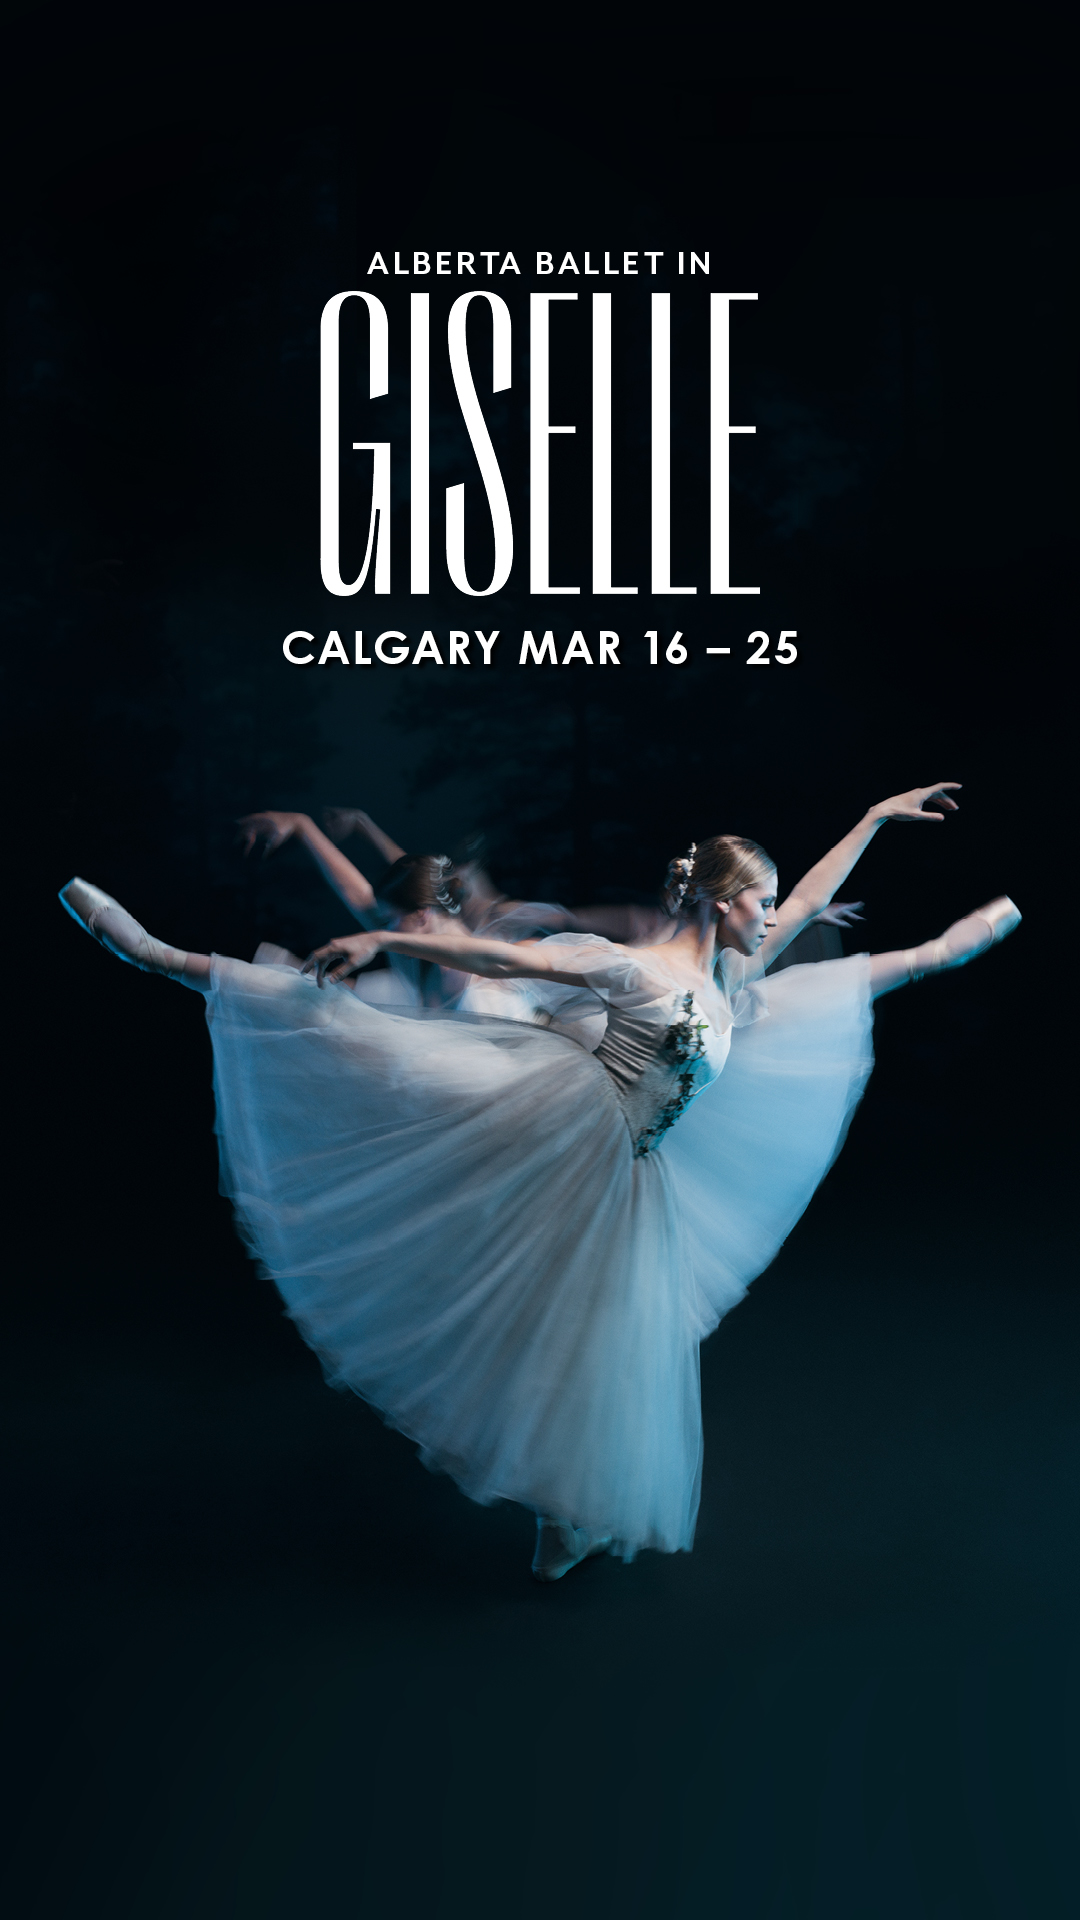 Alberta Ballet Giselle